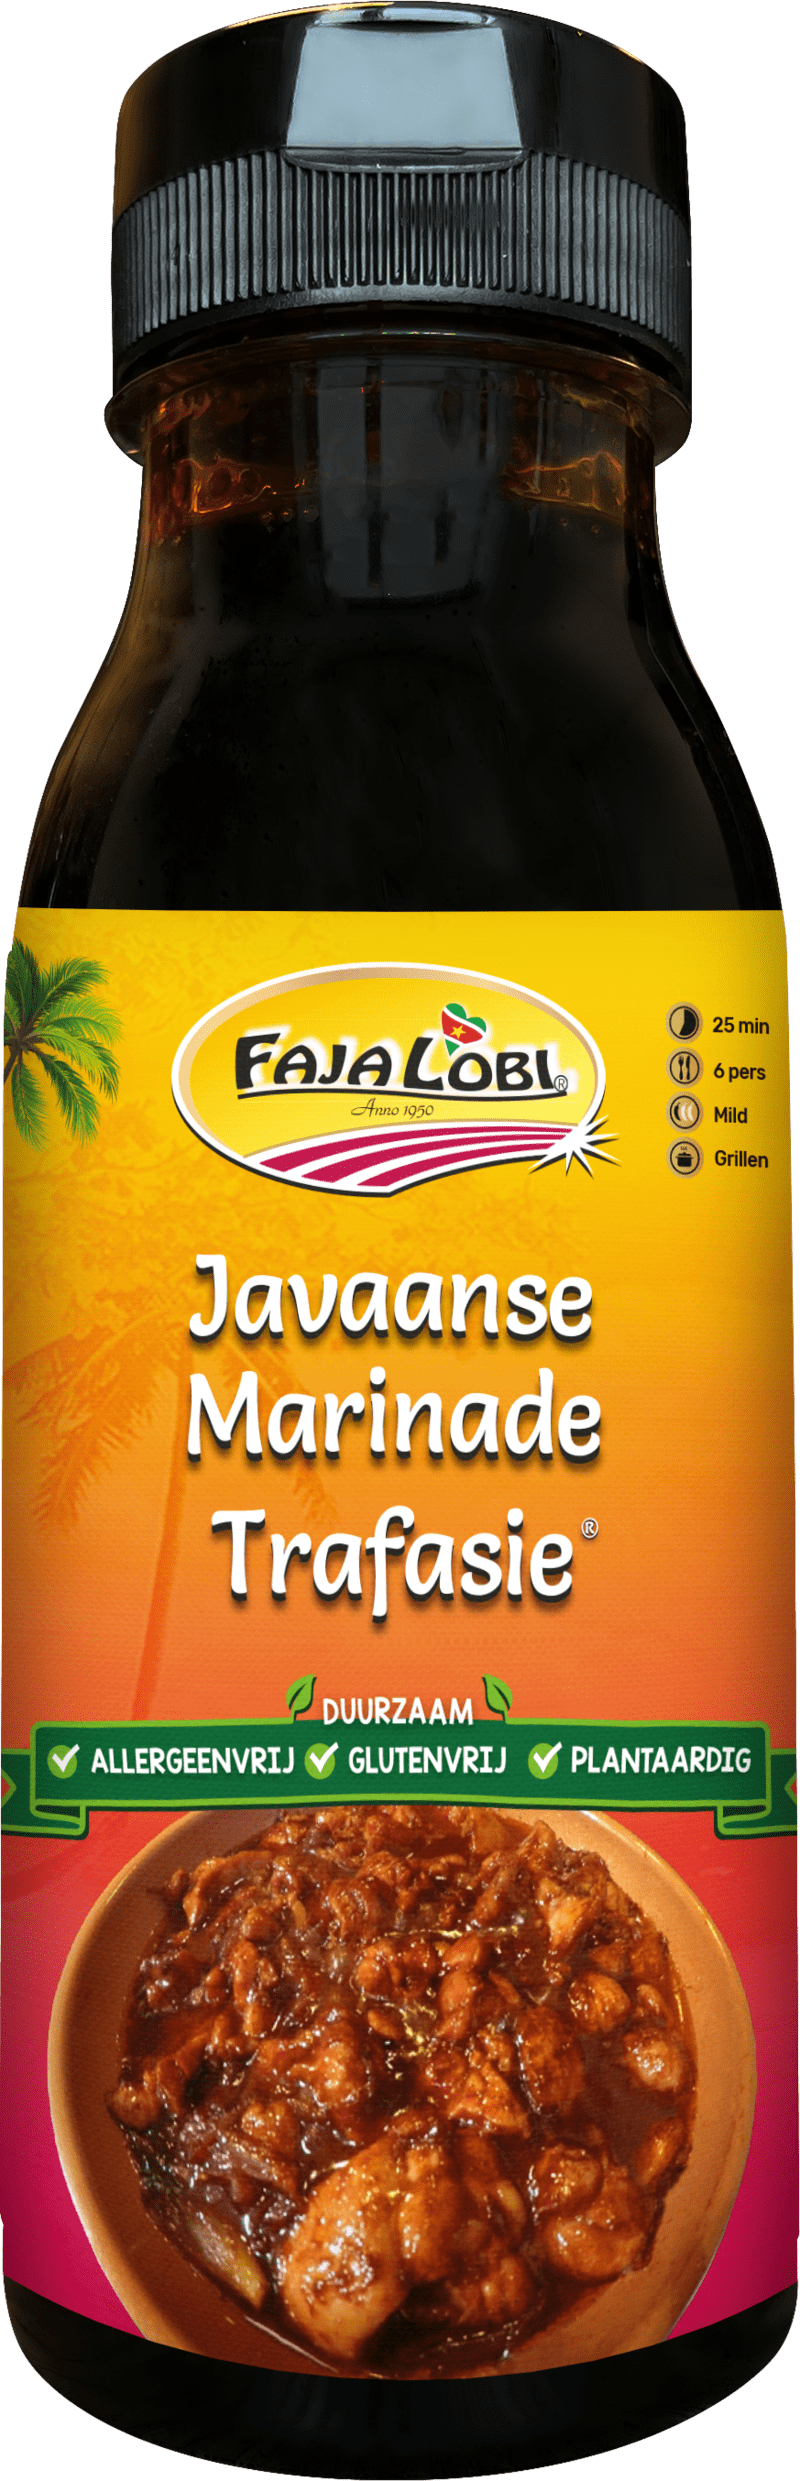 Afbeelding van FAJA LOBI Javaanse Marinade Trafasie 250 ml